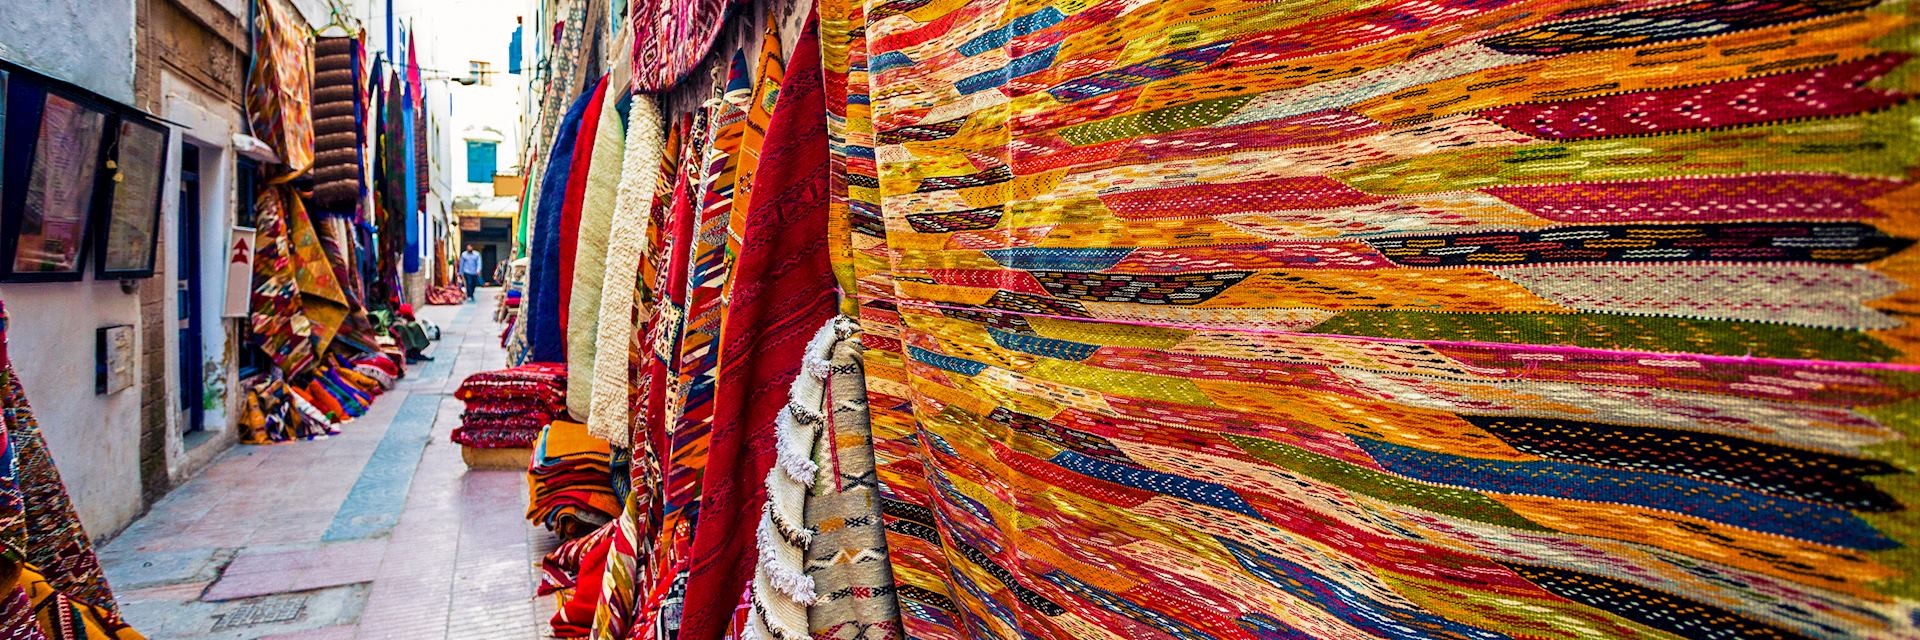 Carpets on sale in a souq in Marrakesh